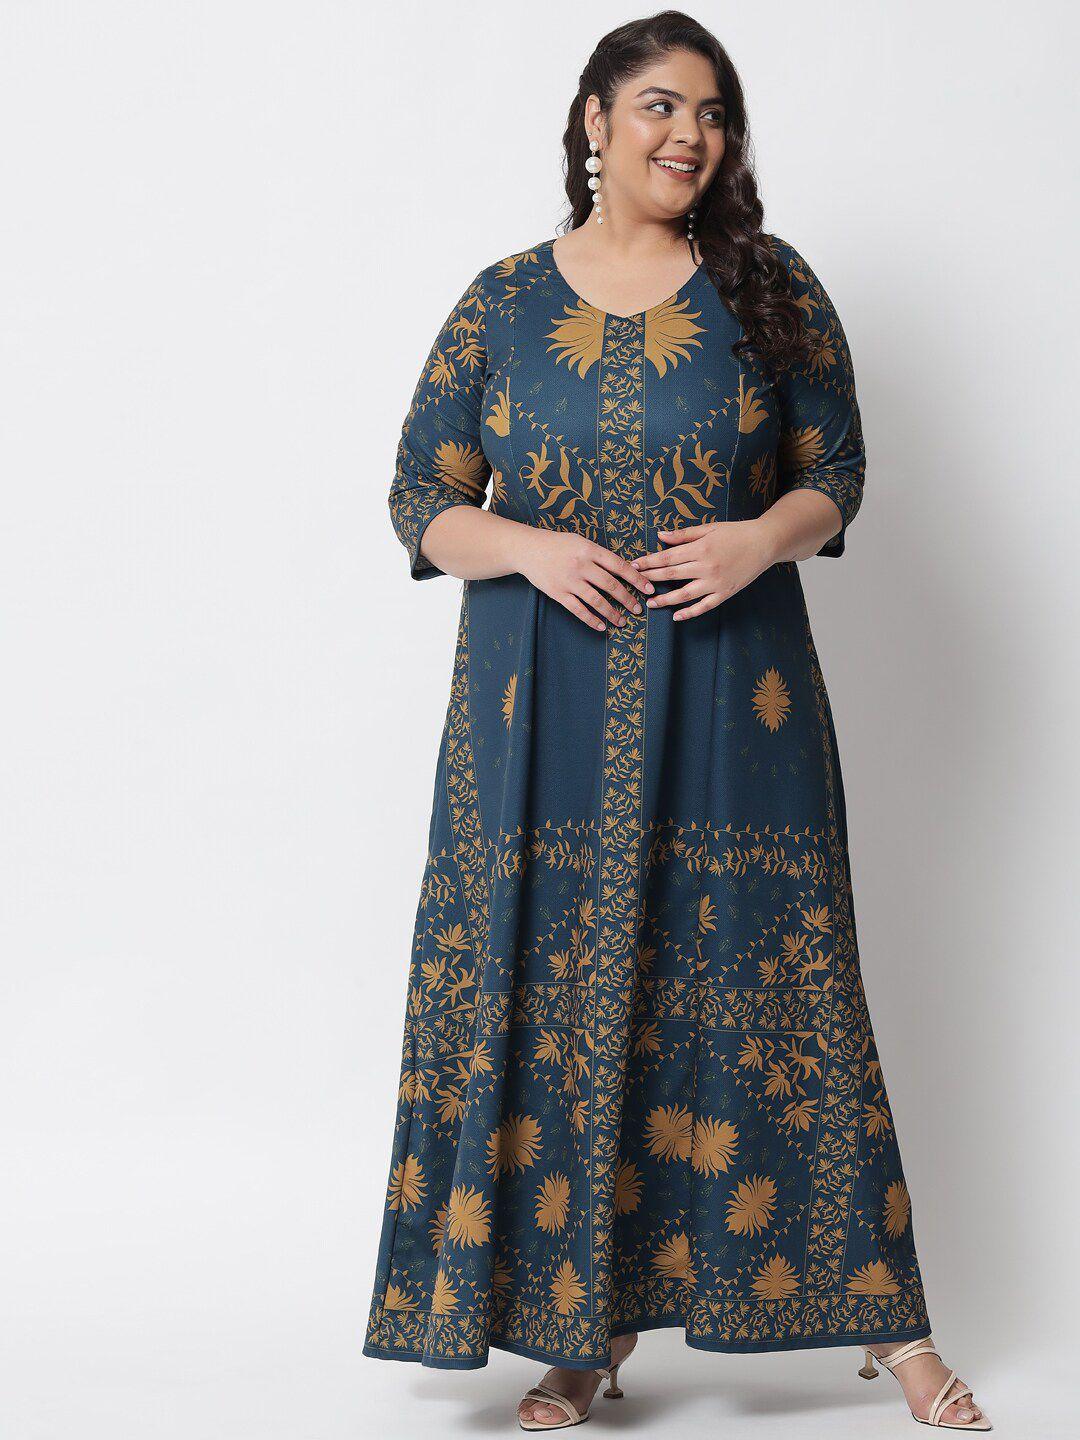 amydus plus size teal blue & mustard yellow ethnic motifs ethnic a-line dress